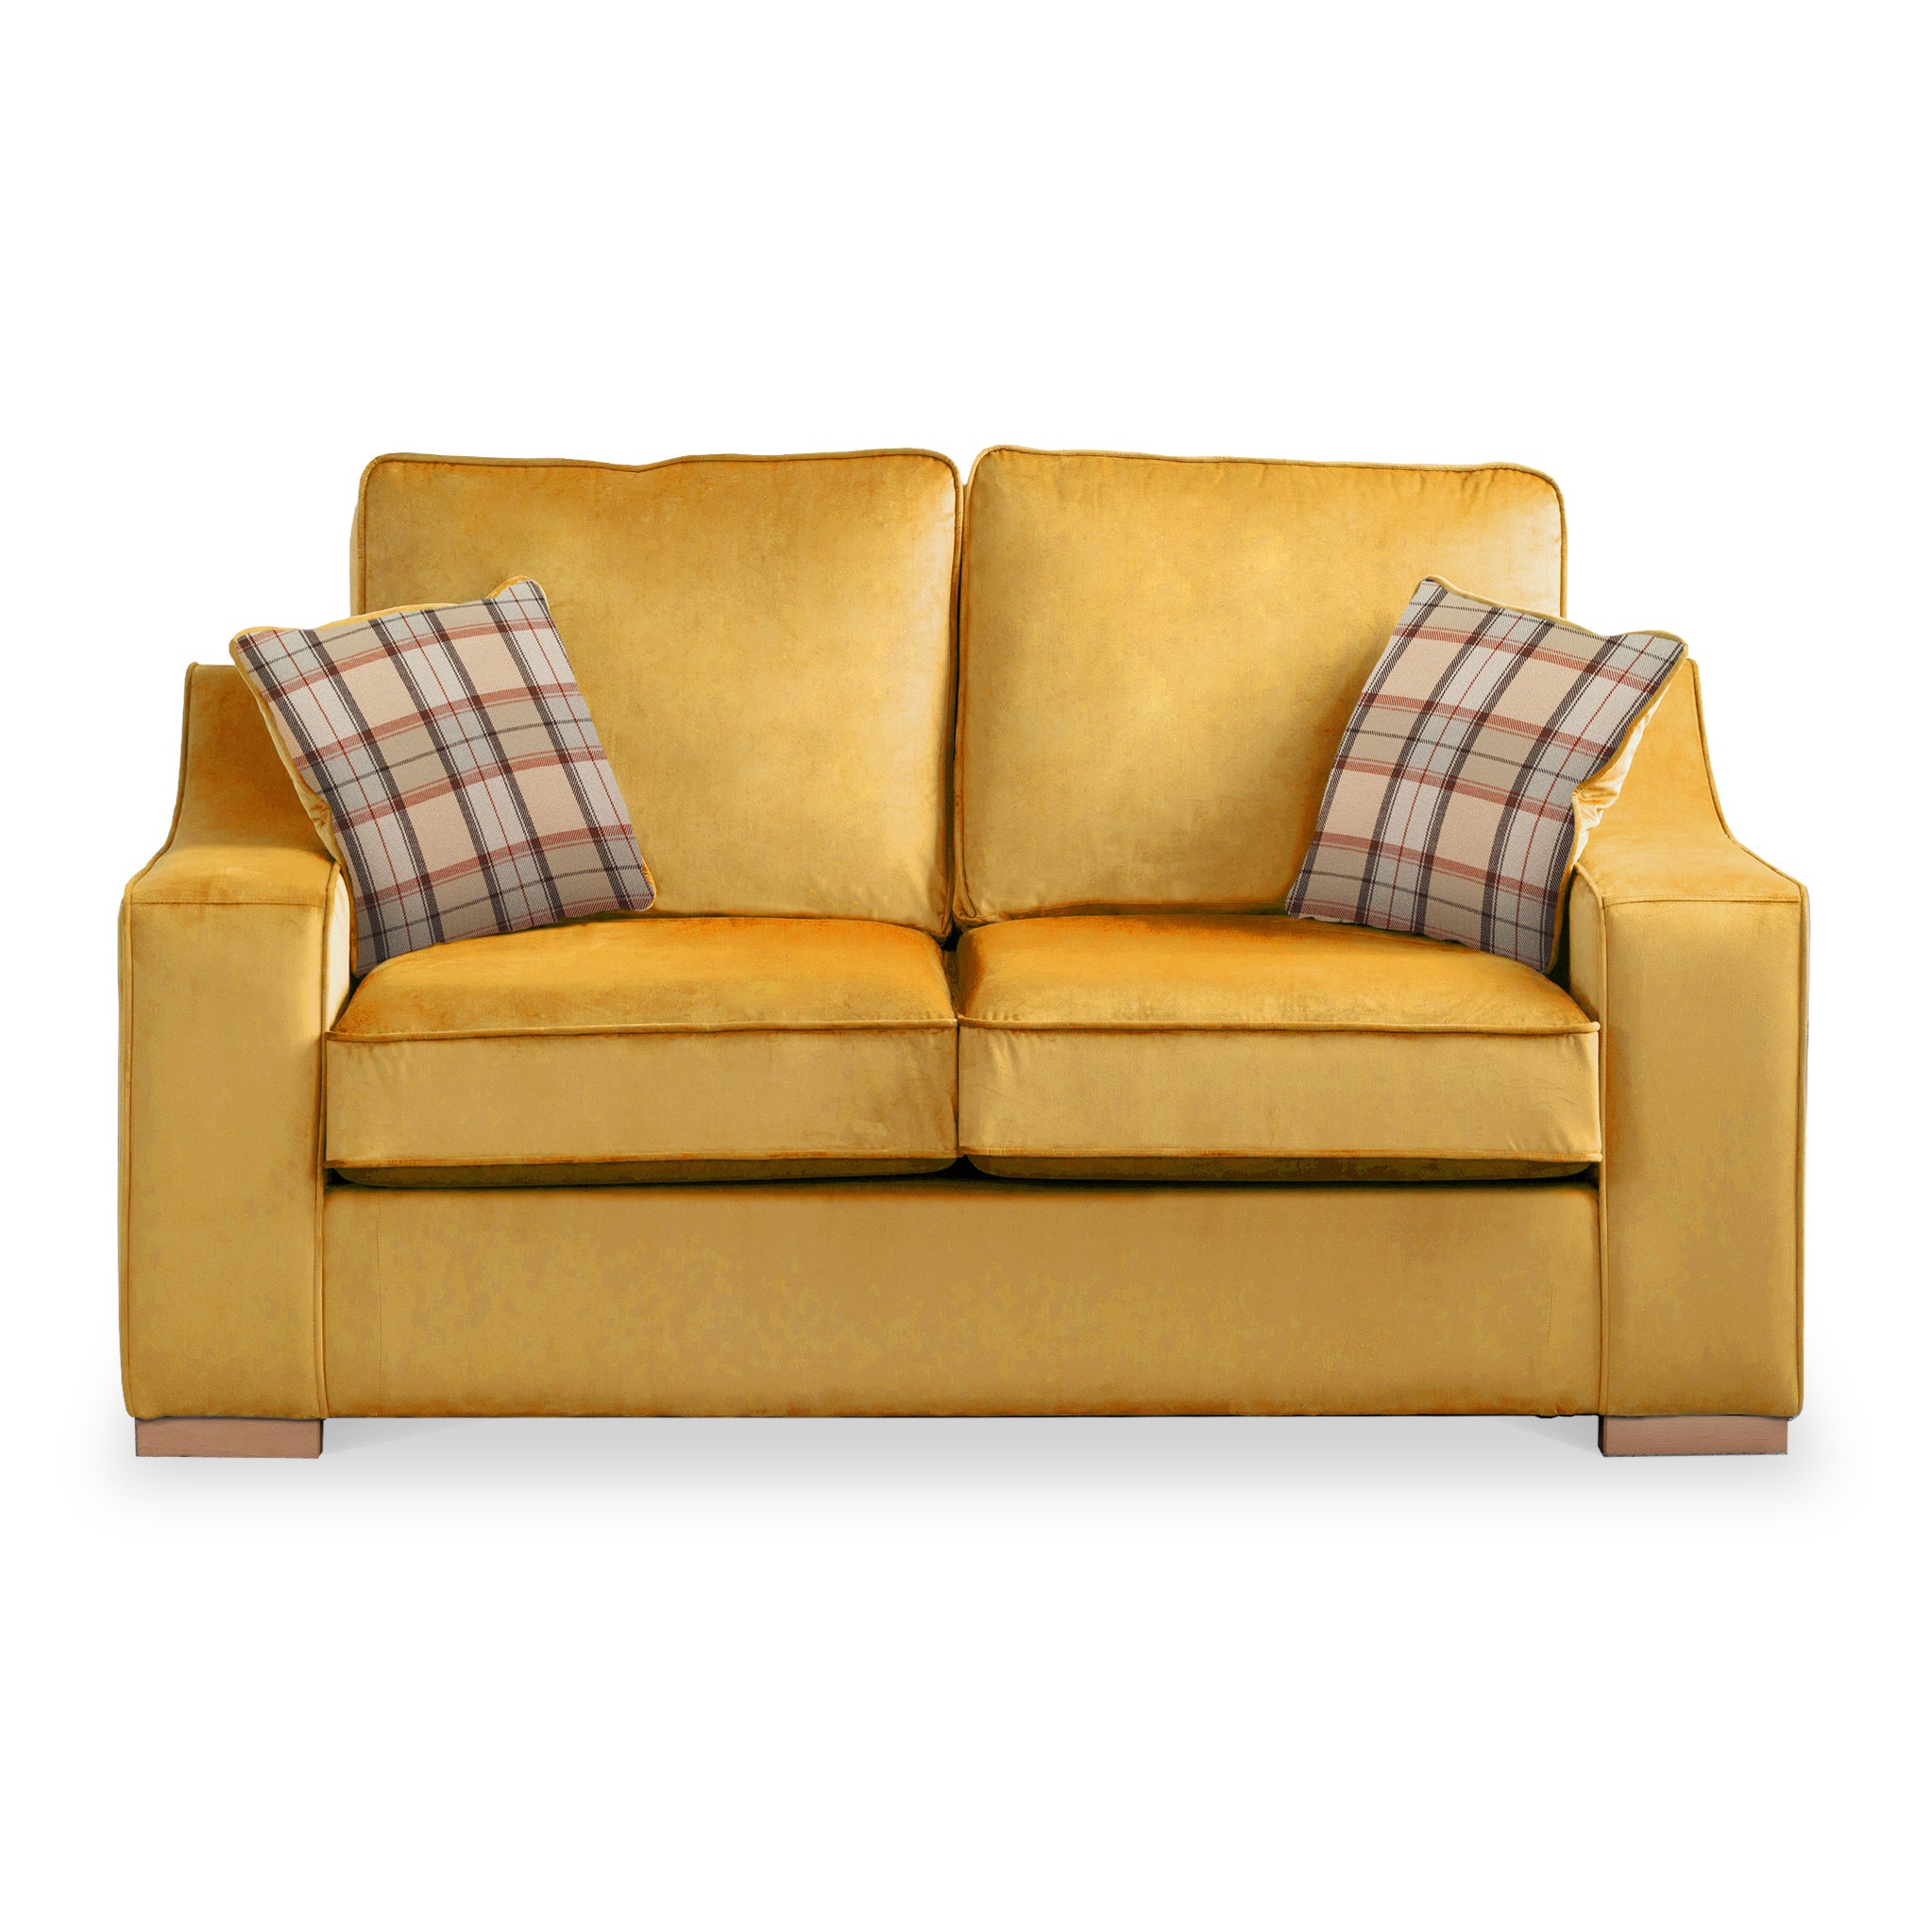 Dover Velvet Fabric 2 Seater Sofa Bed Teal Mustard Powder